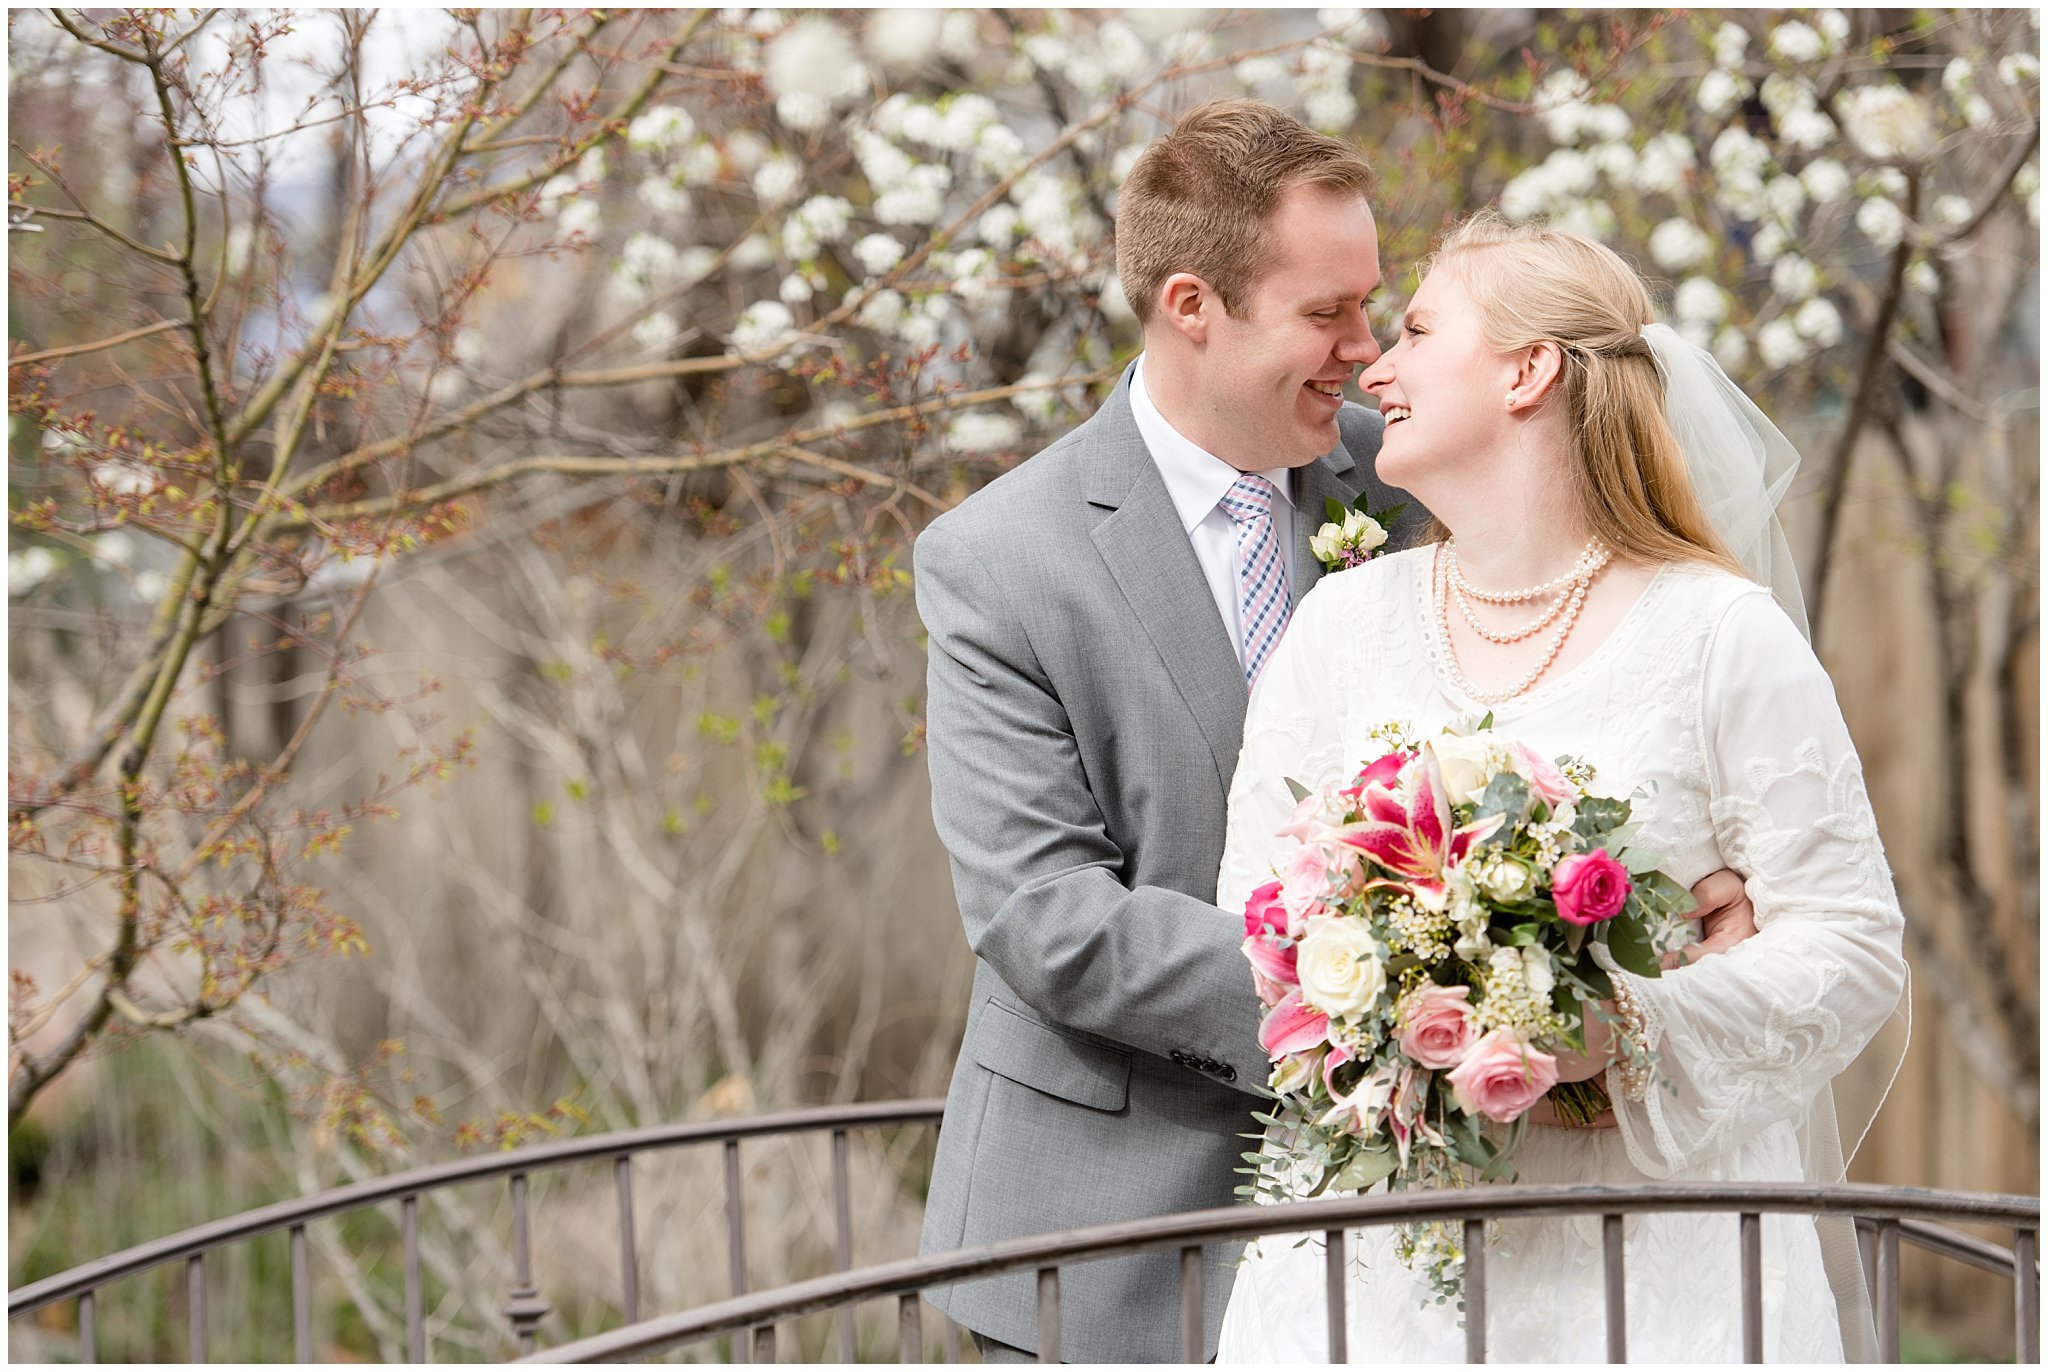 Eldrege Manor wedding reception | Spring Utah Wedding | Candid bride and groom photography